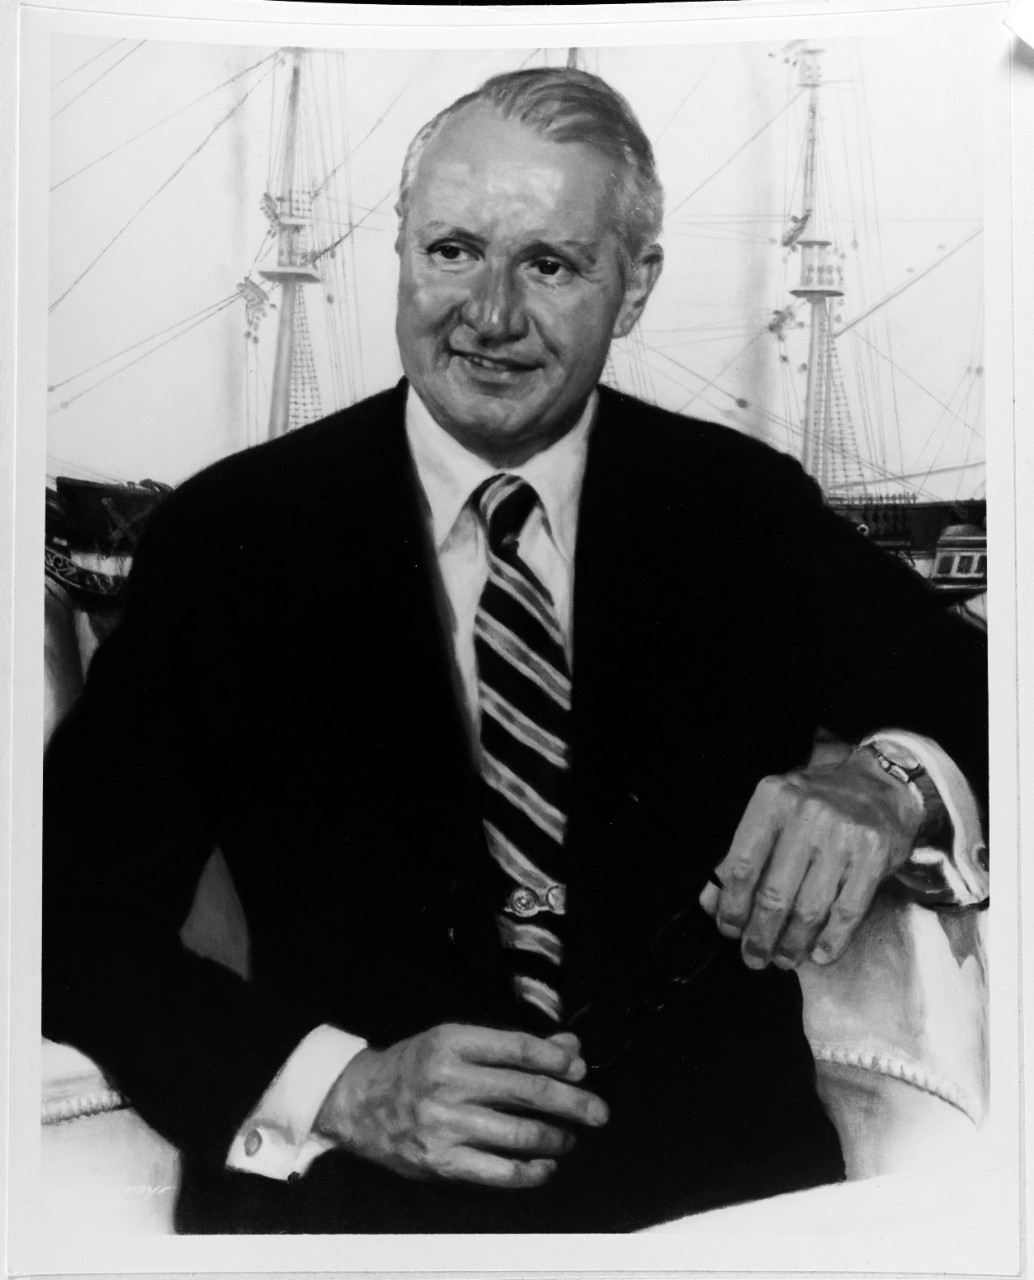 J. William Middendorf, III